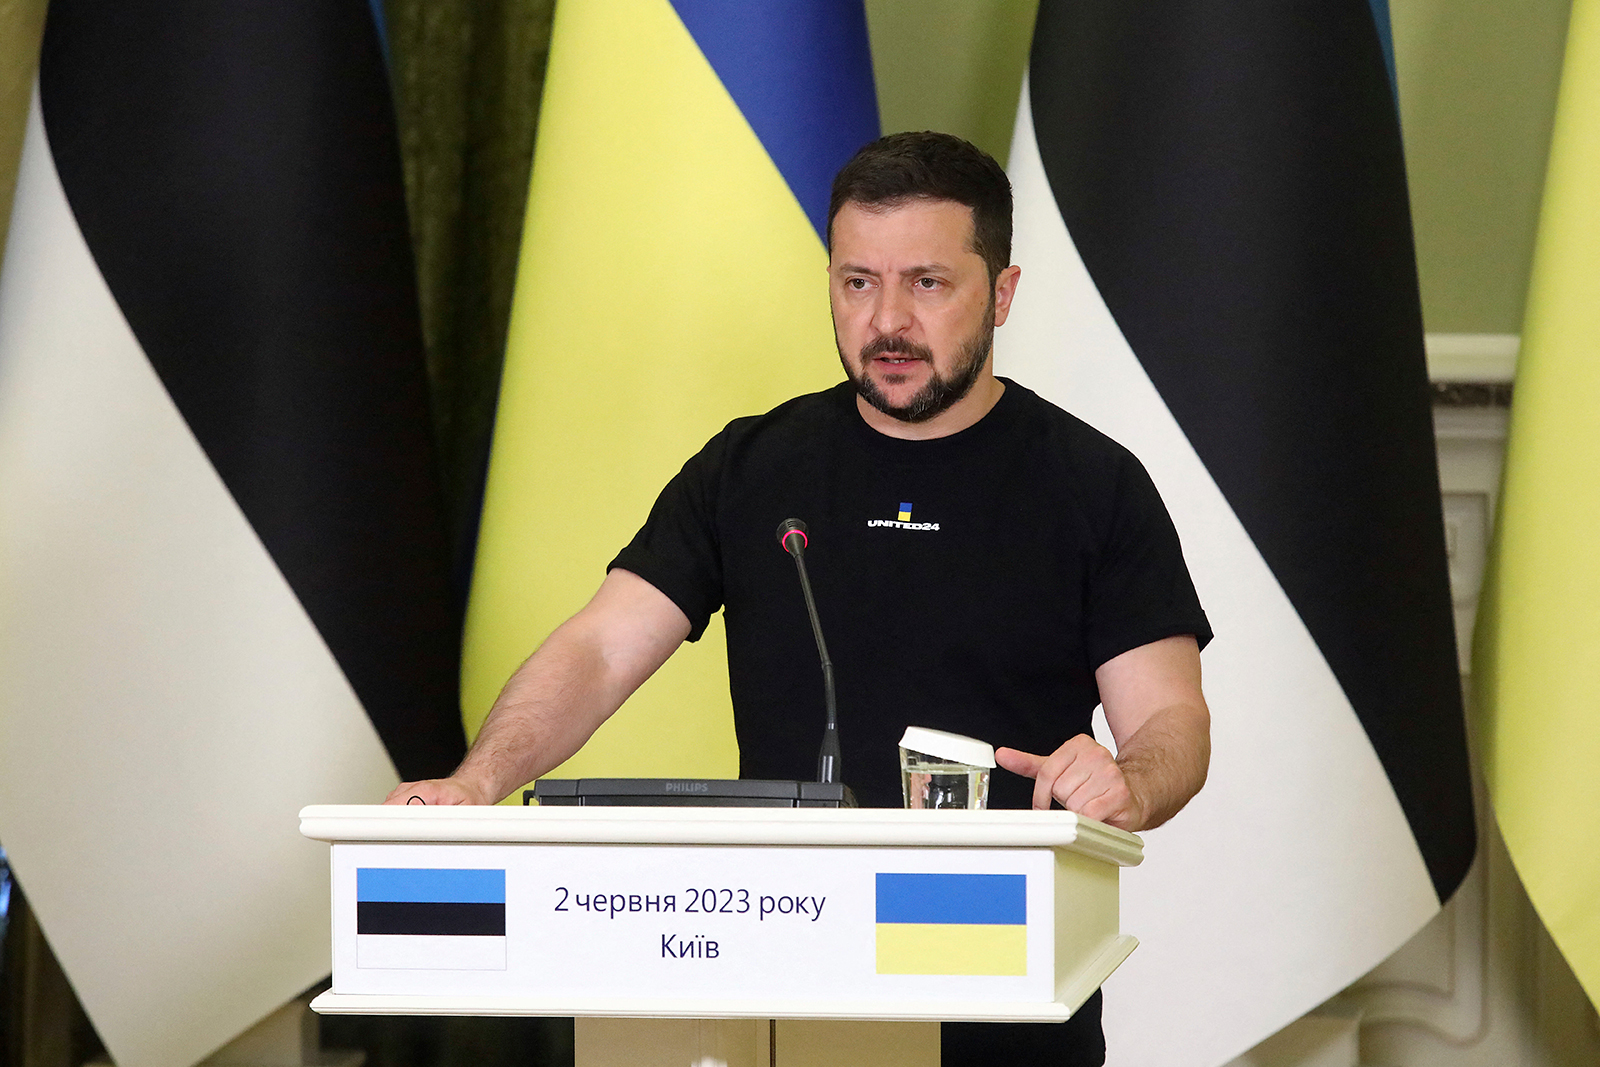 Volodymyr Zelenskyy speaks during a press conference in Kyiv, Ukraine on June 2.